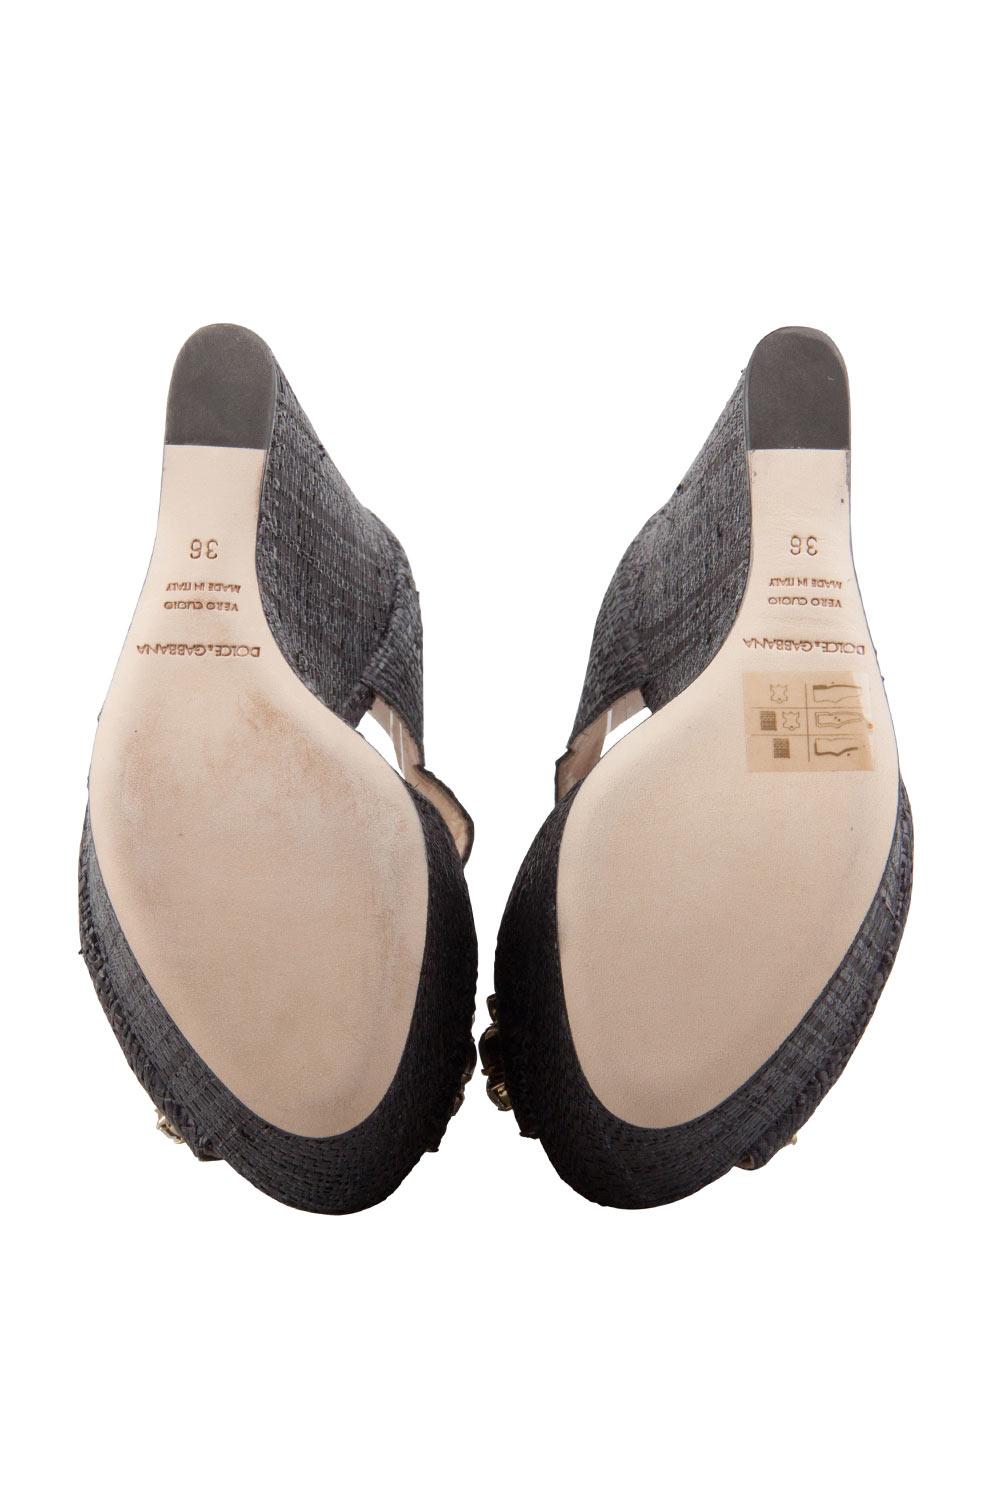 Dolce and Gabbana Black Crystal Embellished Wedge Peep Toe Sandals Size 36 3